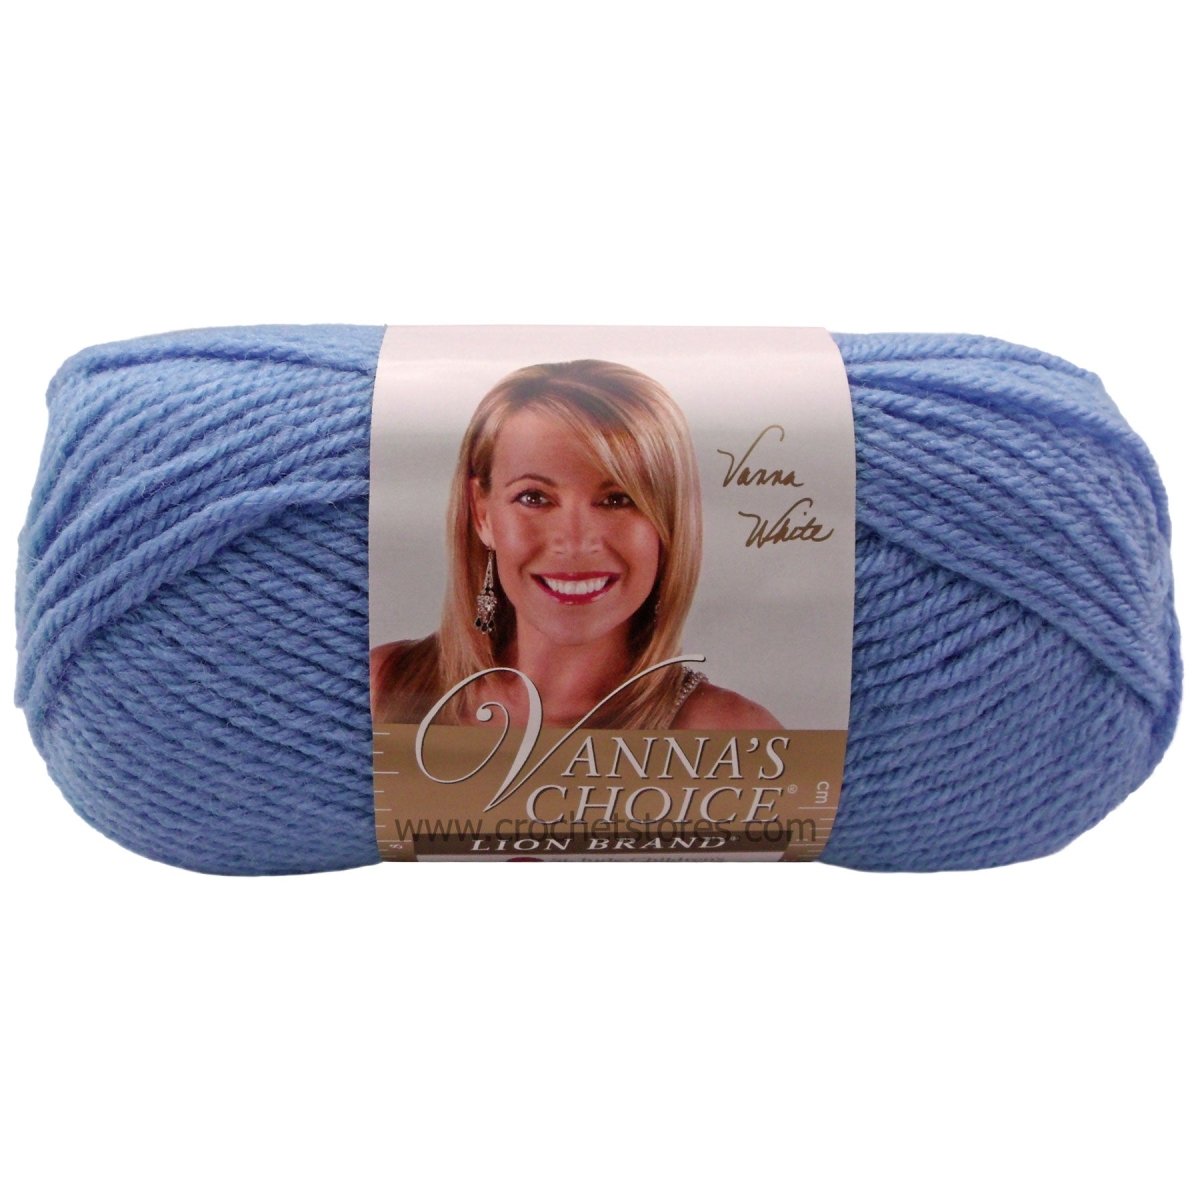 VANNAS CHOICE - Crochetstores860-111